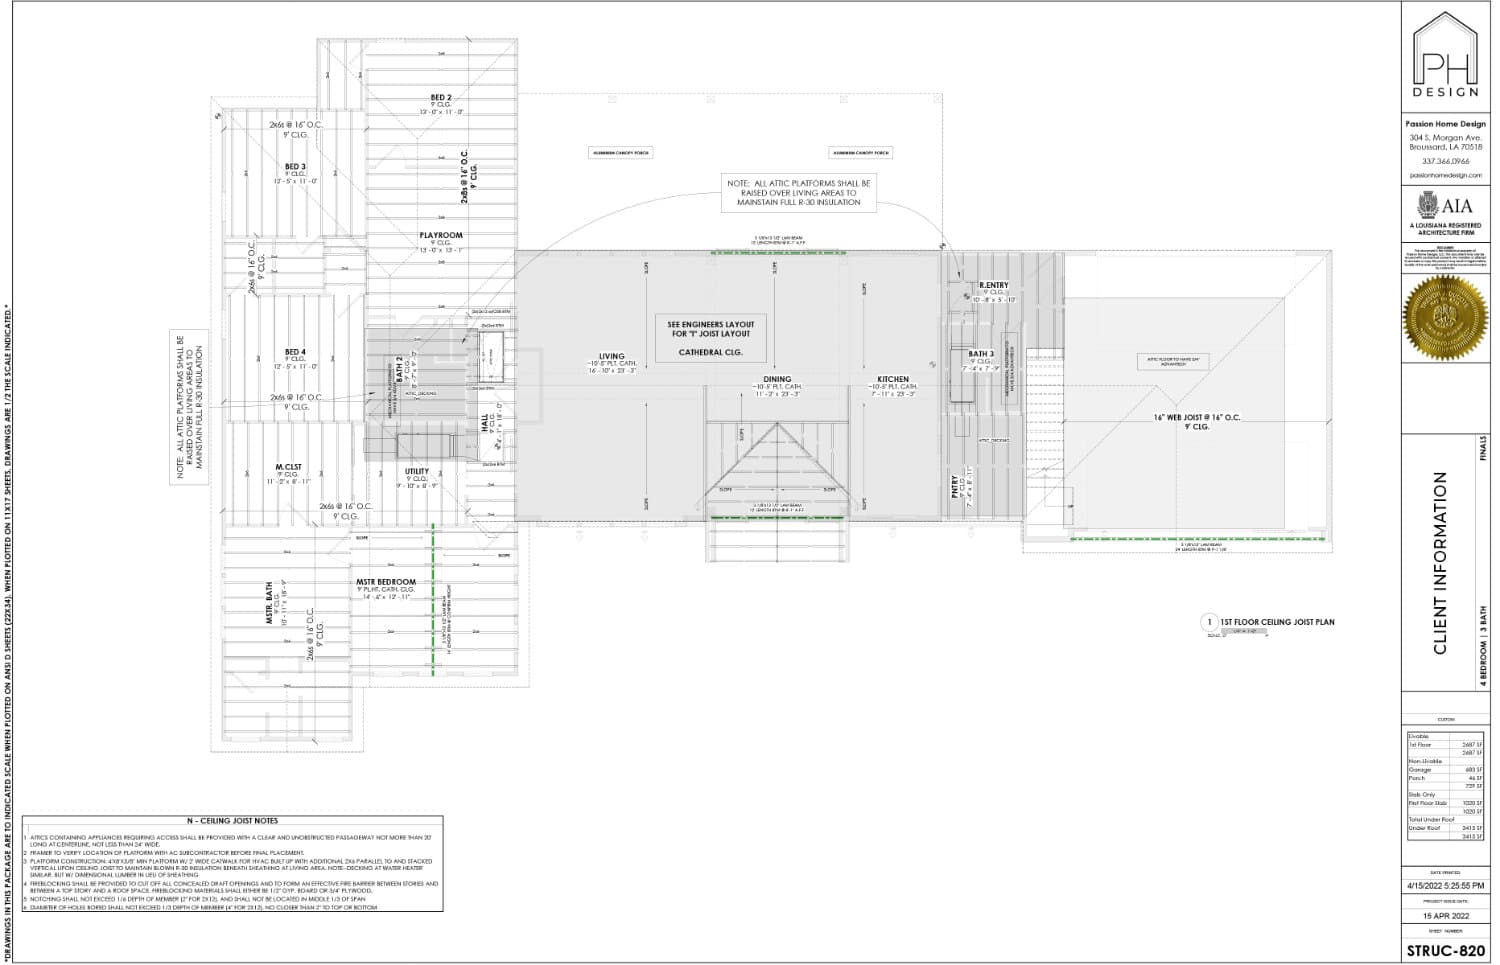 Ceiling joist page of blueprint plans